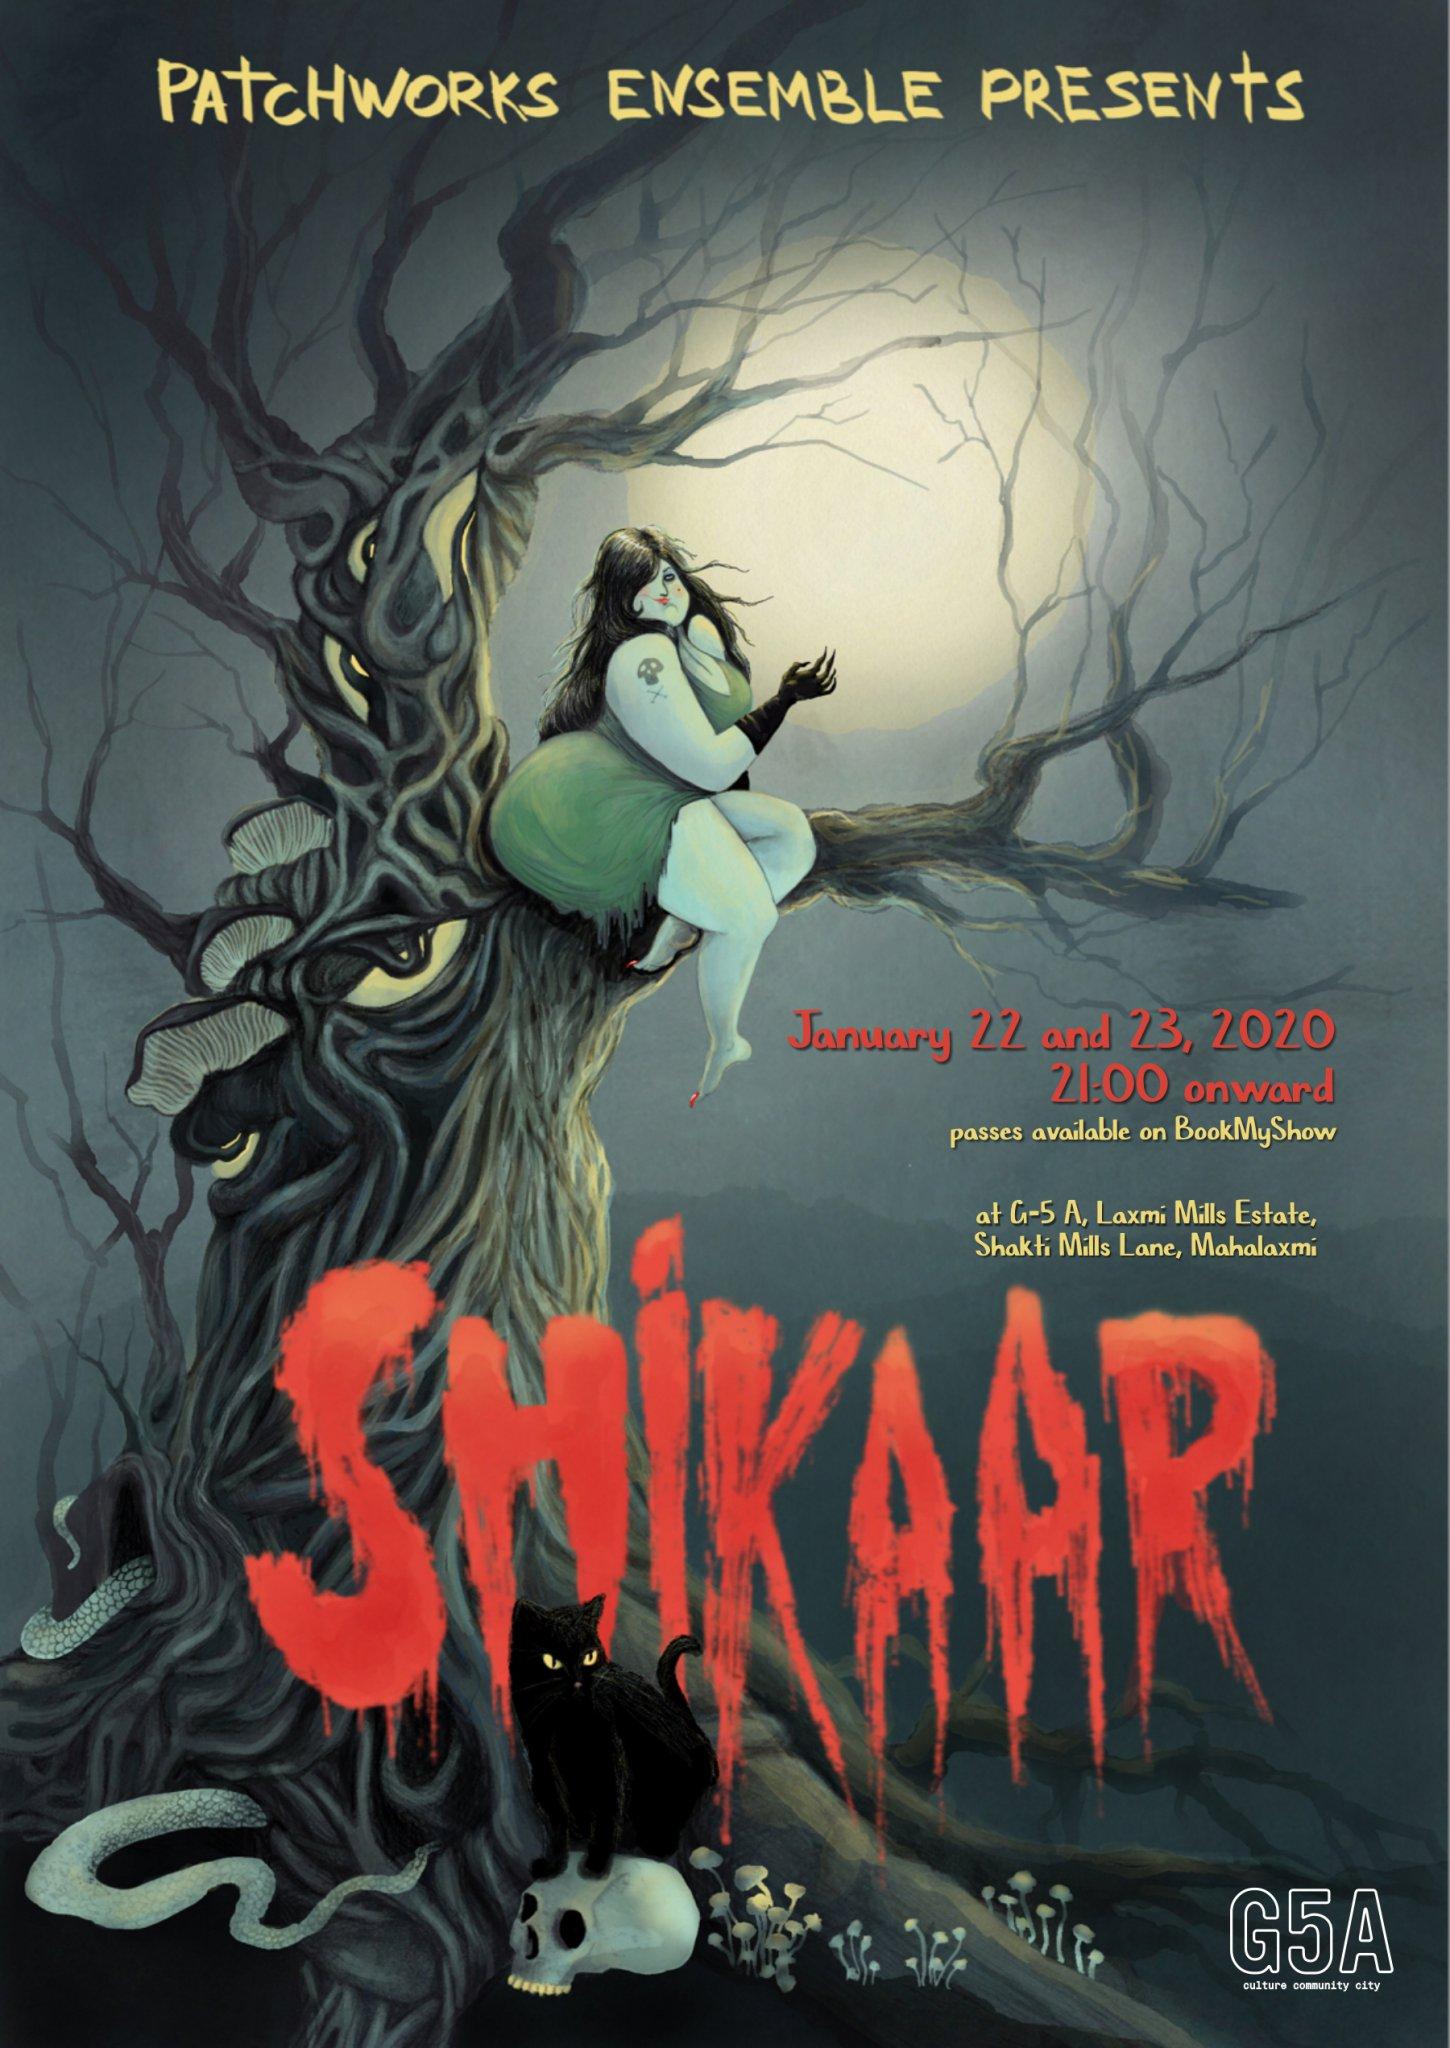 Shikaar by Patchworks Ensemble